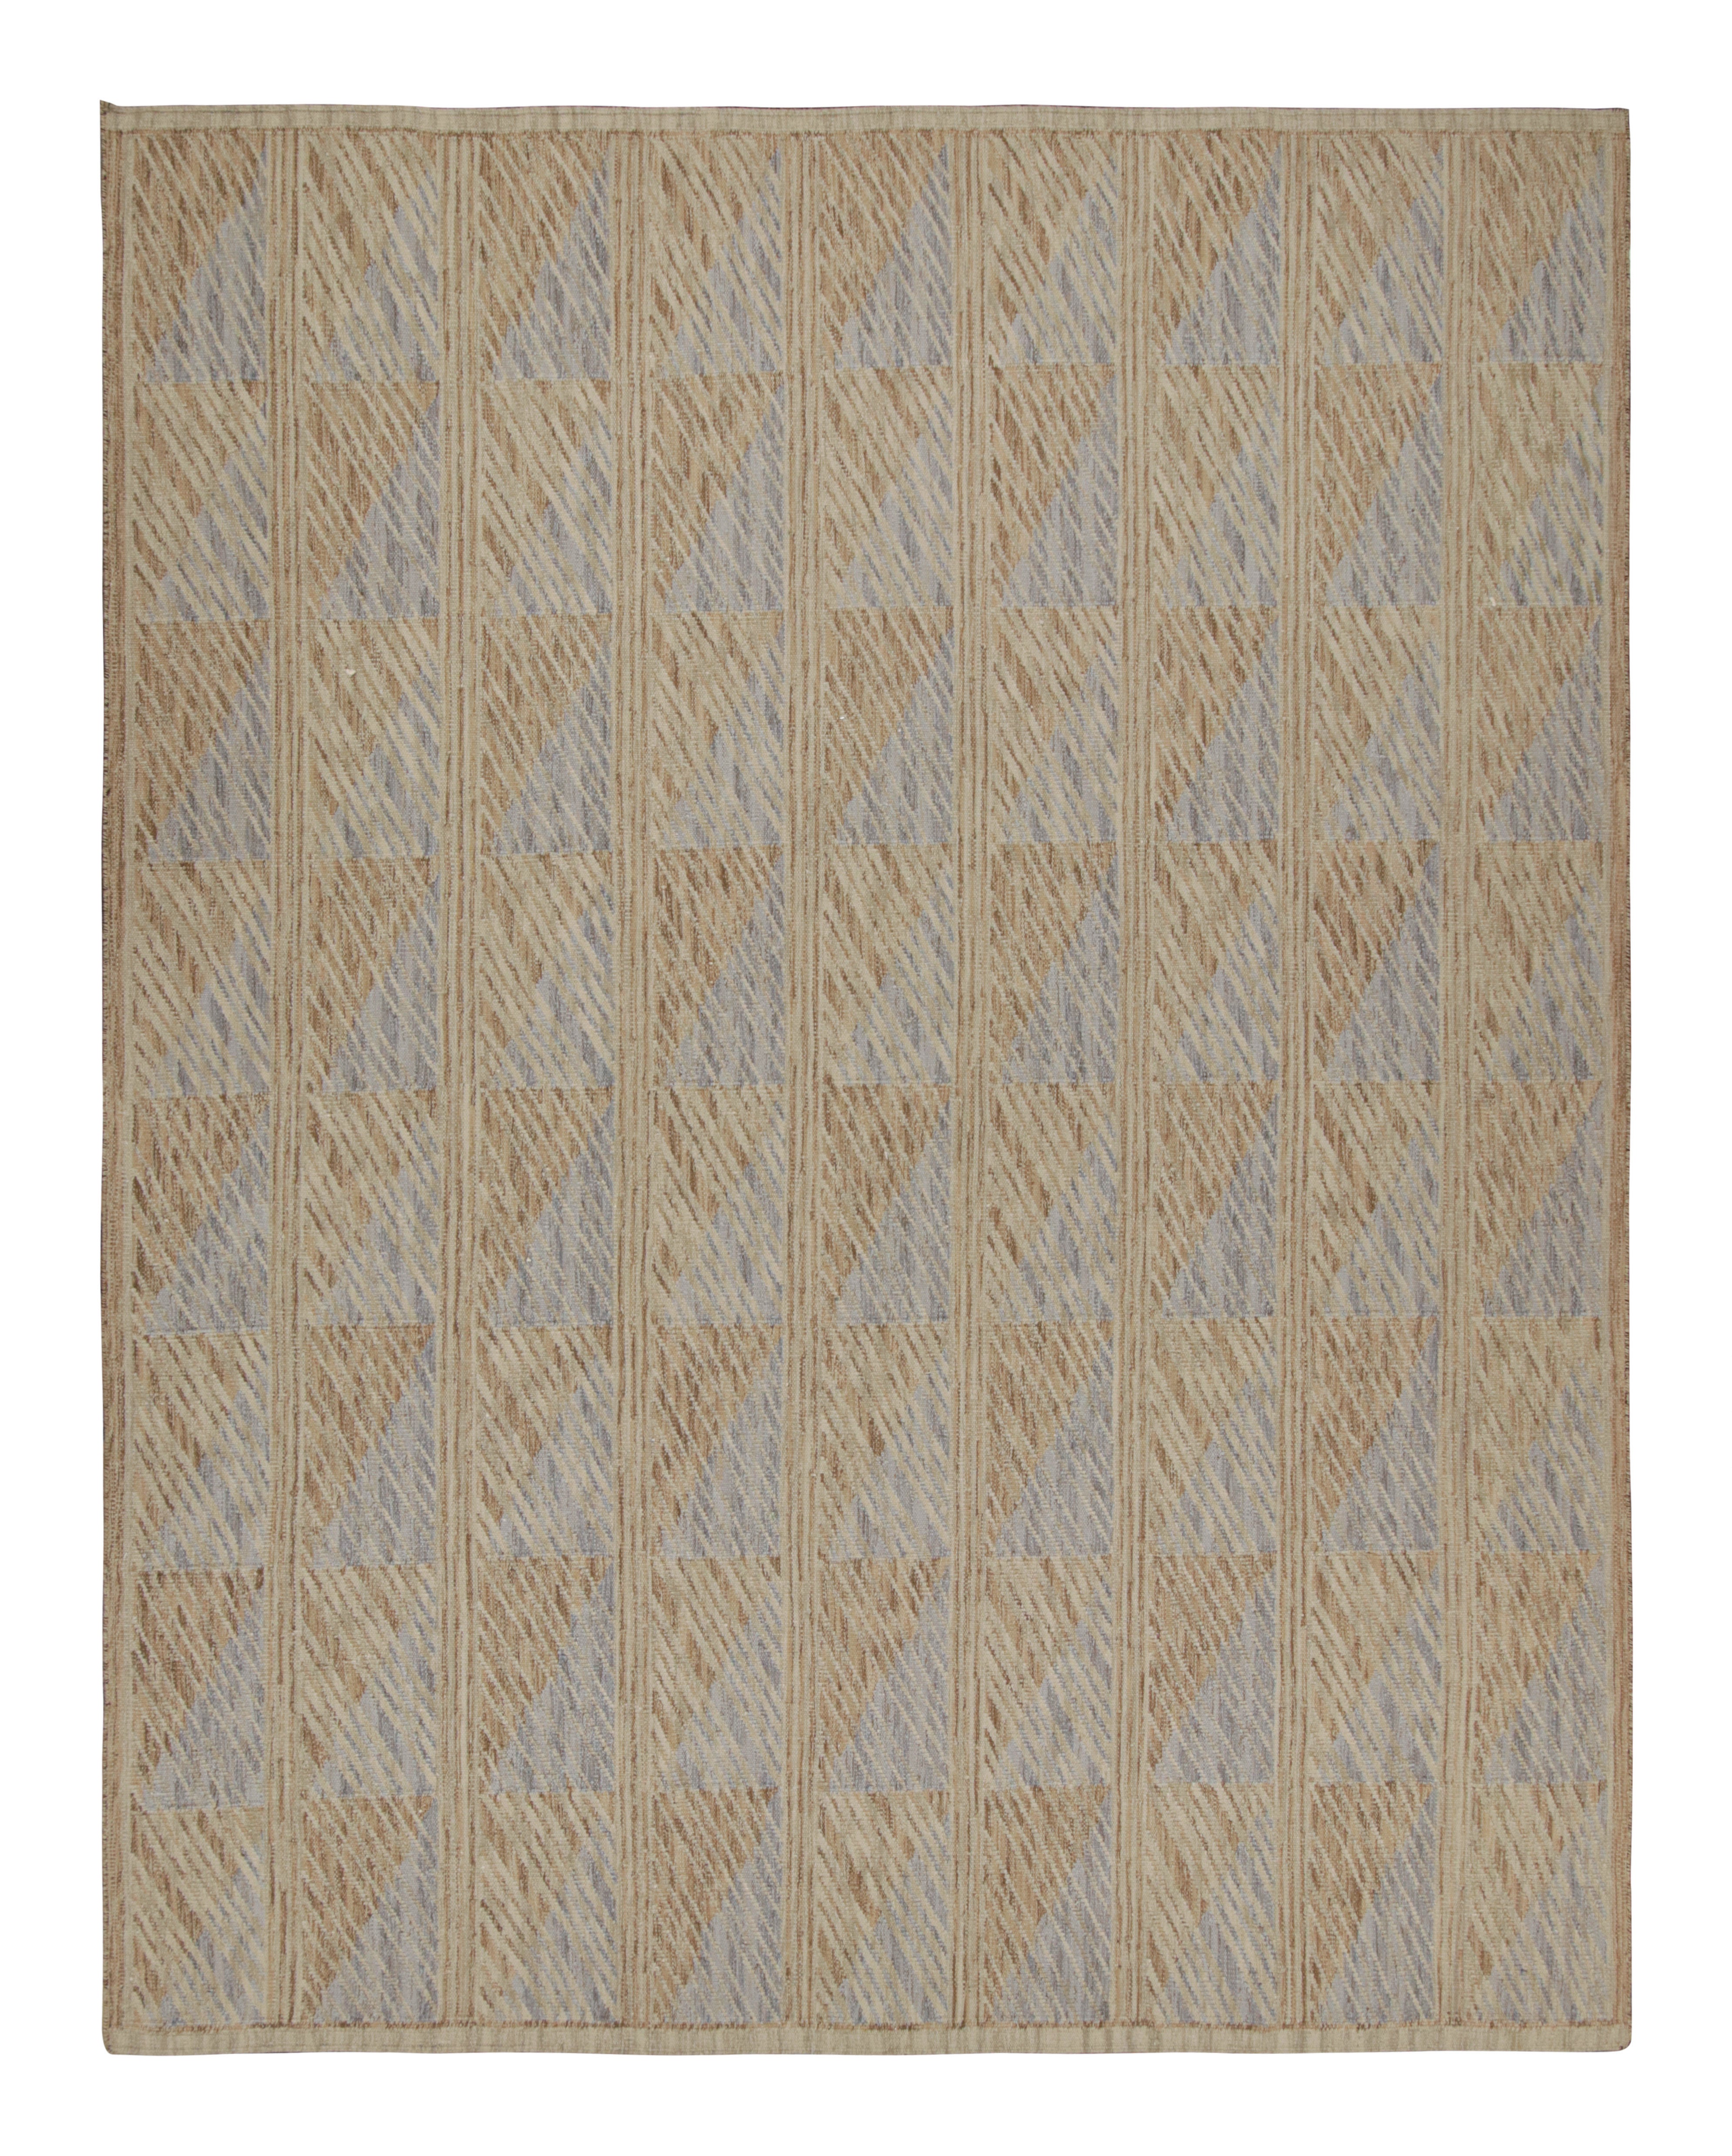 Rug & Kilim’s Oversized Scandinavian Style Rug in Beige-Brown Geometric Patterns For Sale